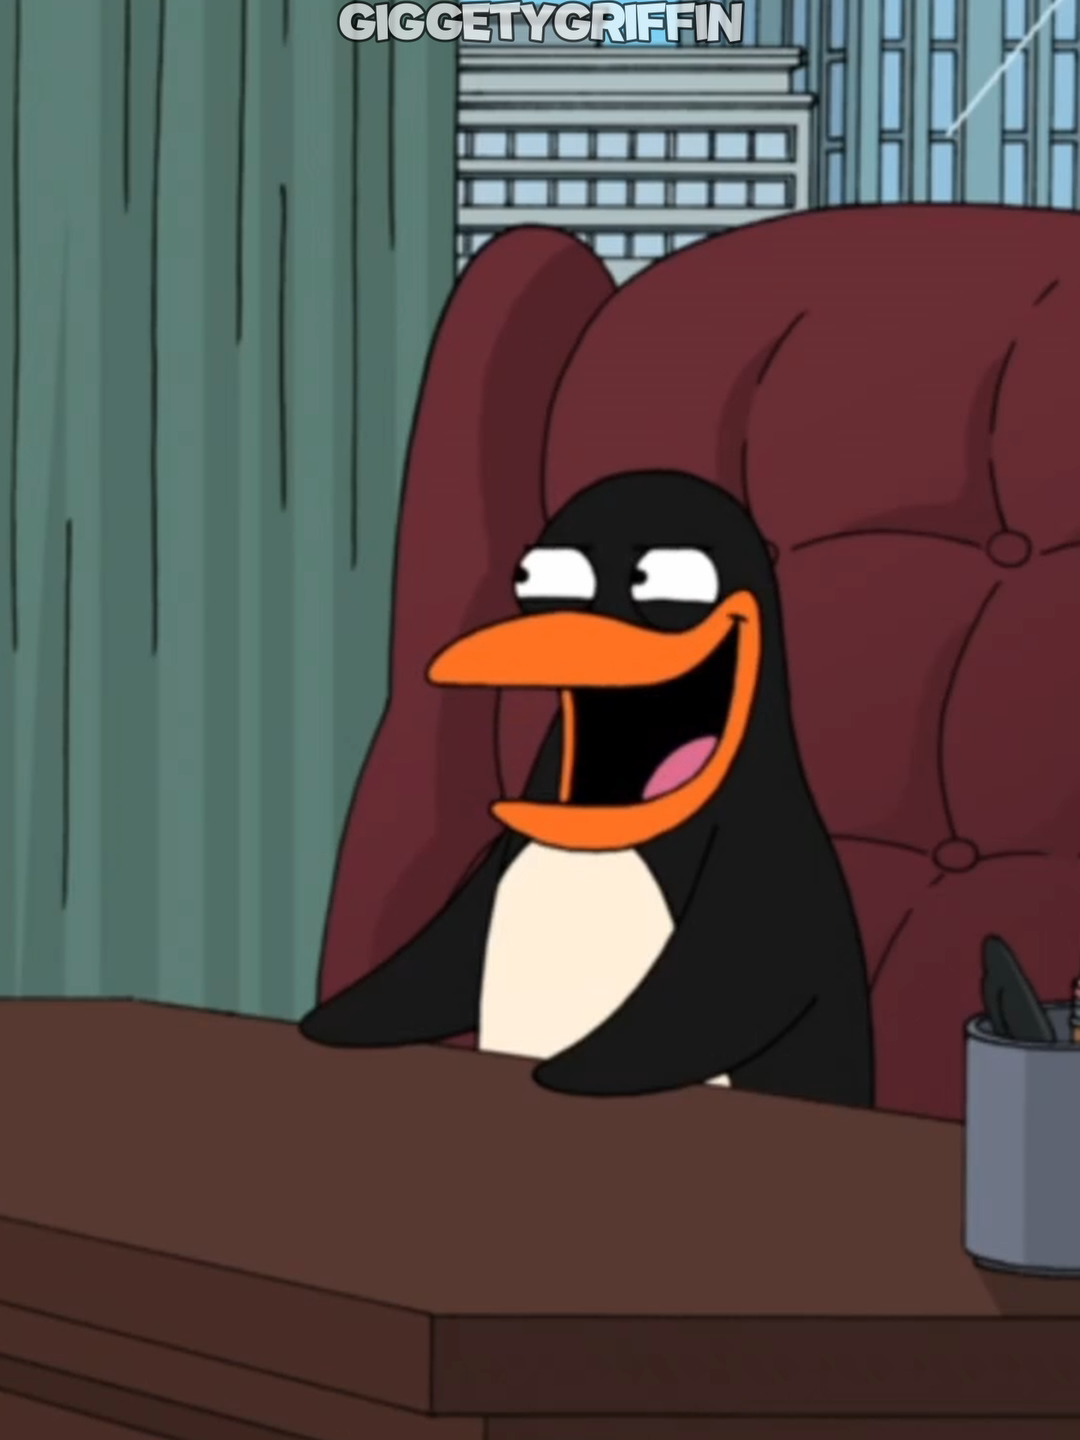 dirty Penguin 😂 #familyguy #familyguyclips #griffin #stewiegriffin #petergriffin #cartoon #series #joke #jokes #laugh #humor #darkhumour #fyp